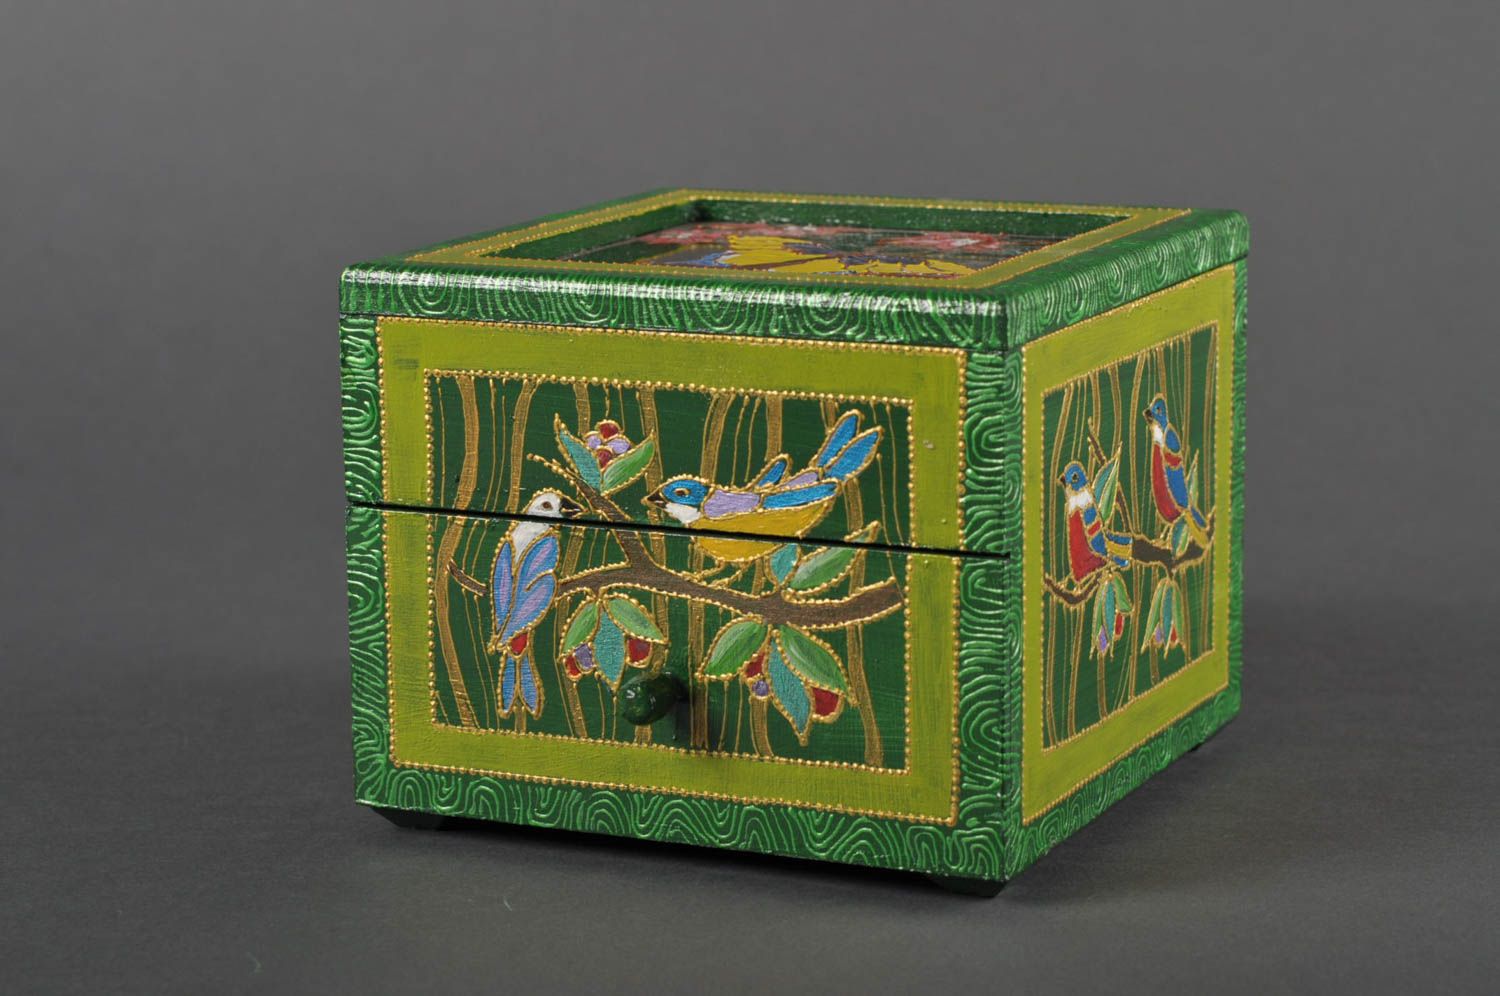 Handmade wooden box design jewelry box ideas interior decorating wood craft photo 1